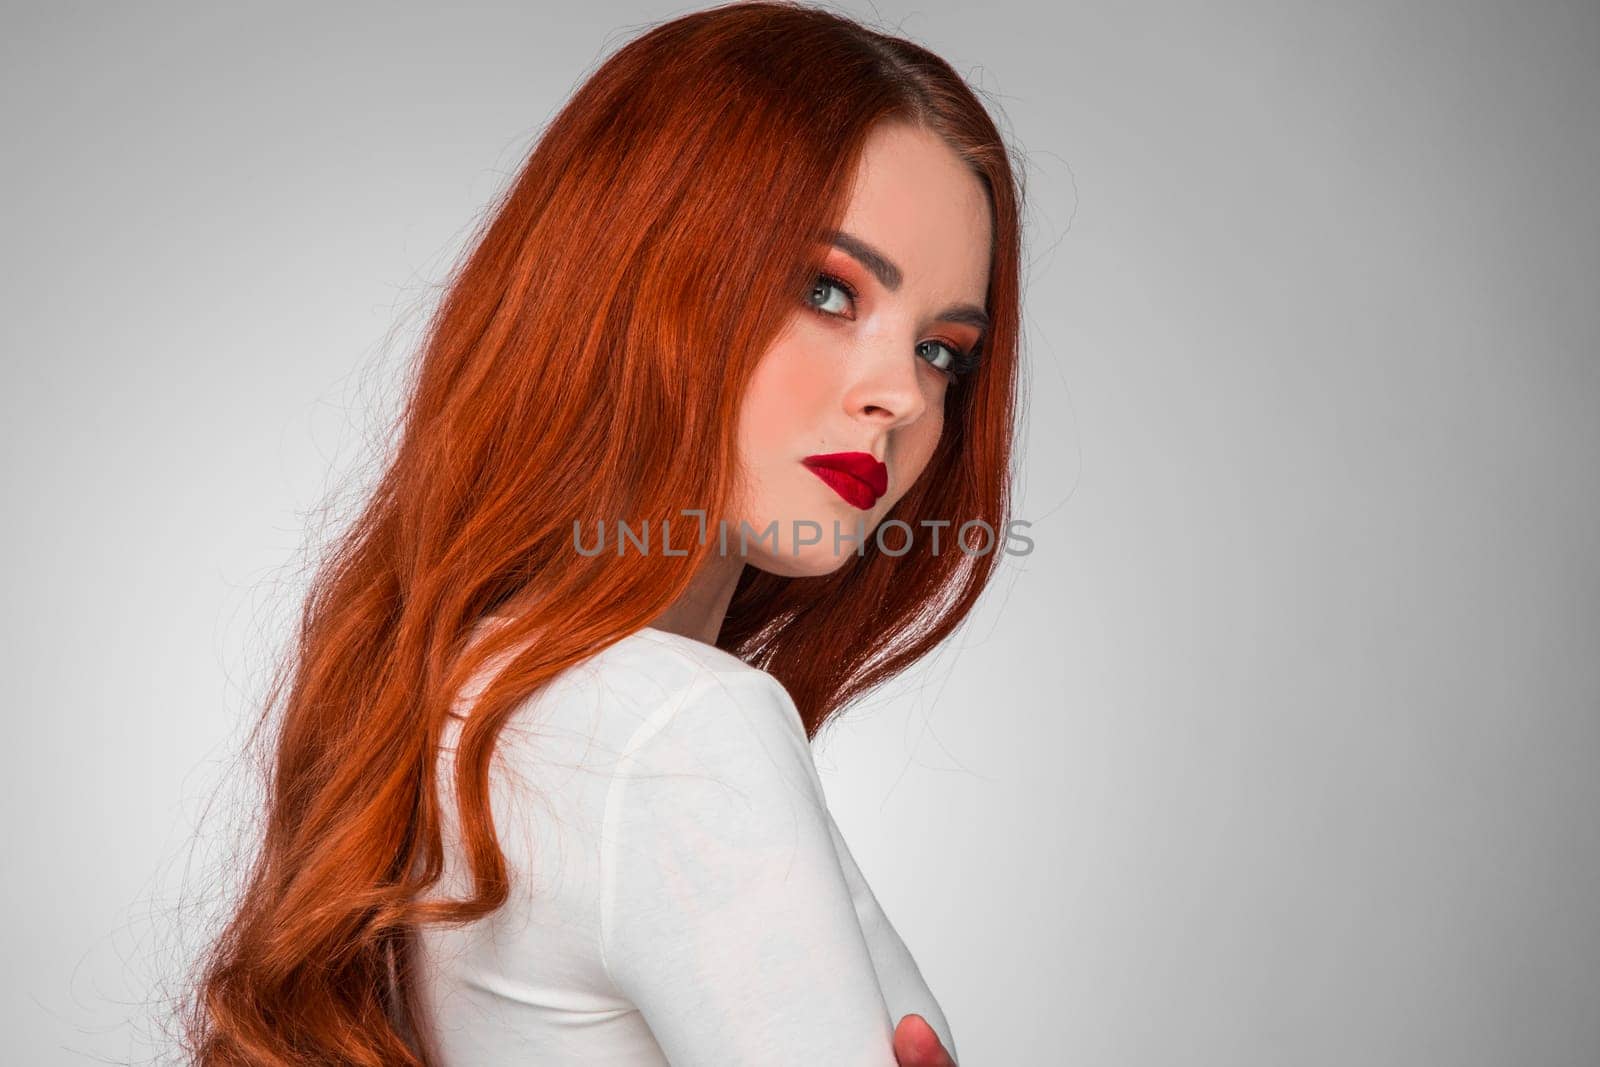 Gorgeous redhead girl with wavy hair beauty studio portrait